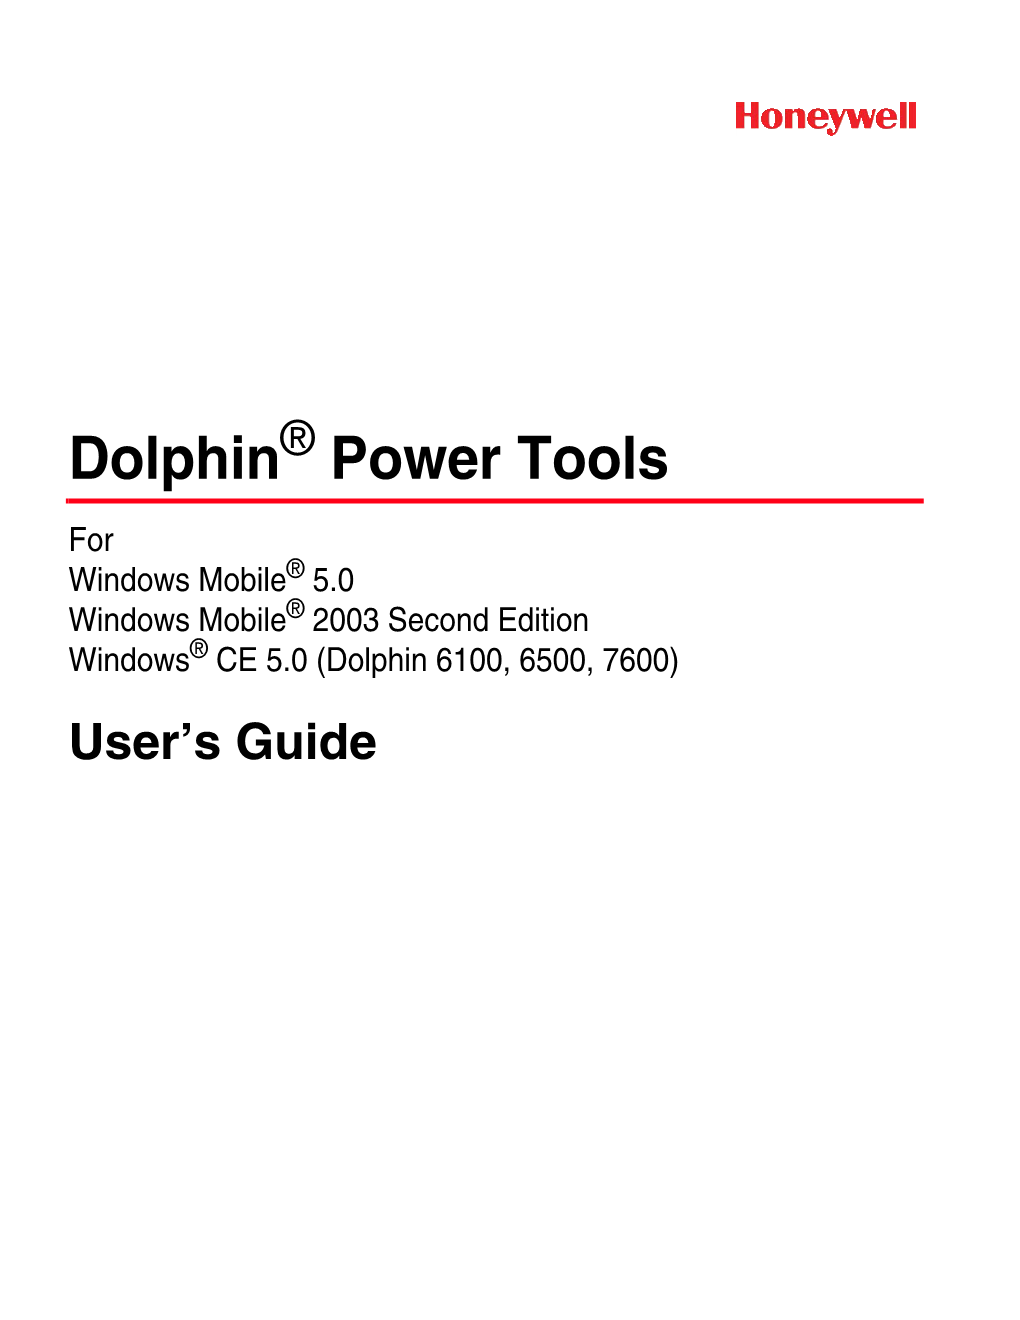 Dolphin Power Tools User's Guide Rev E